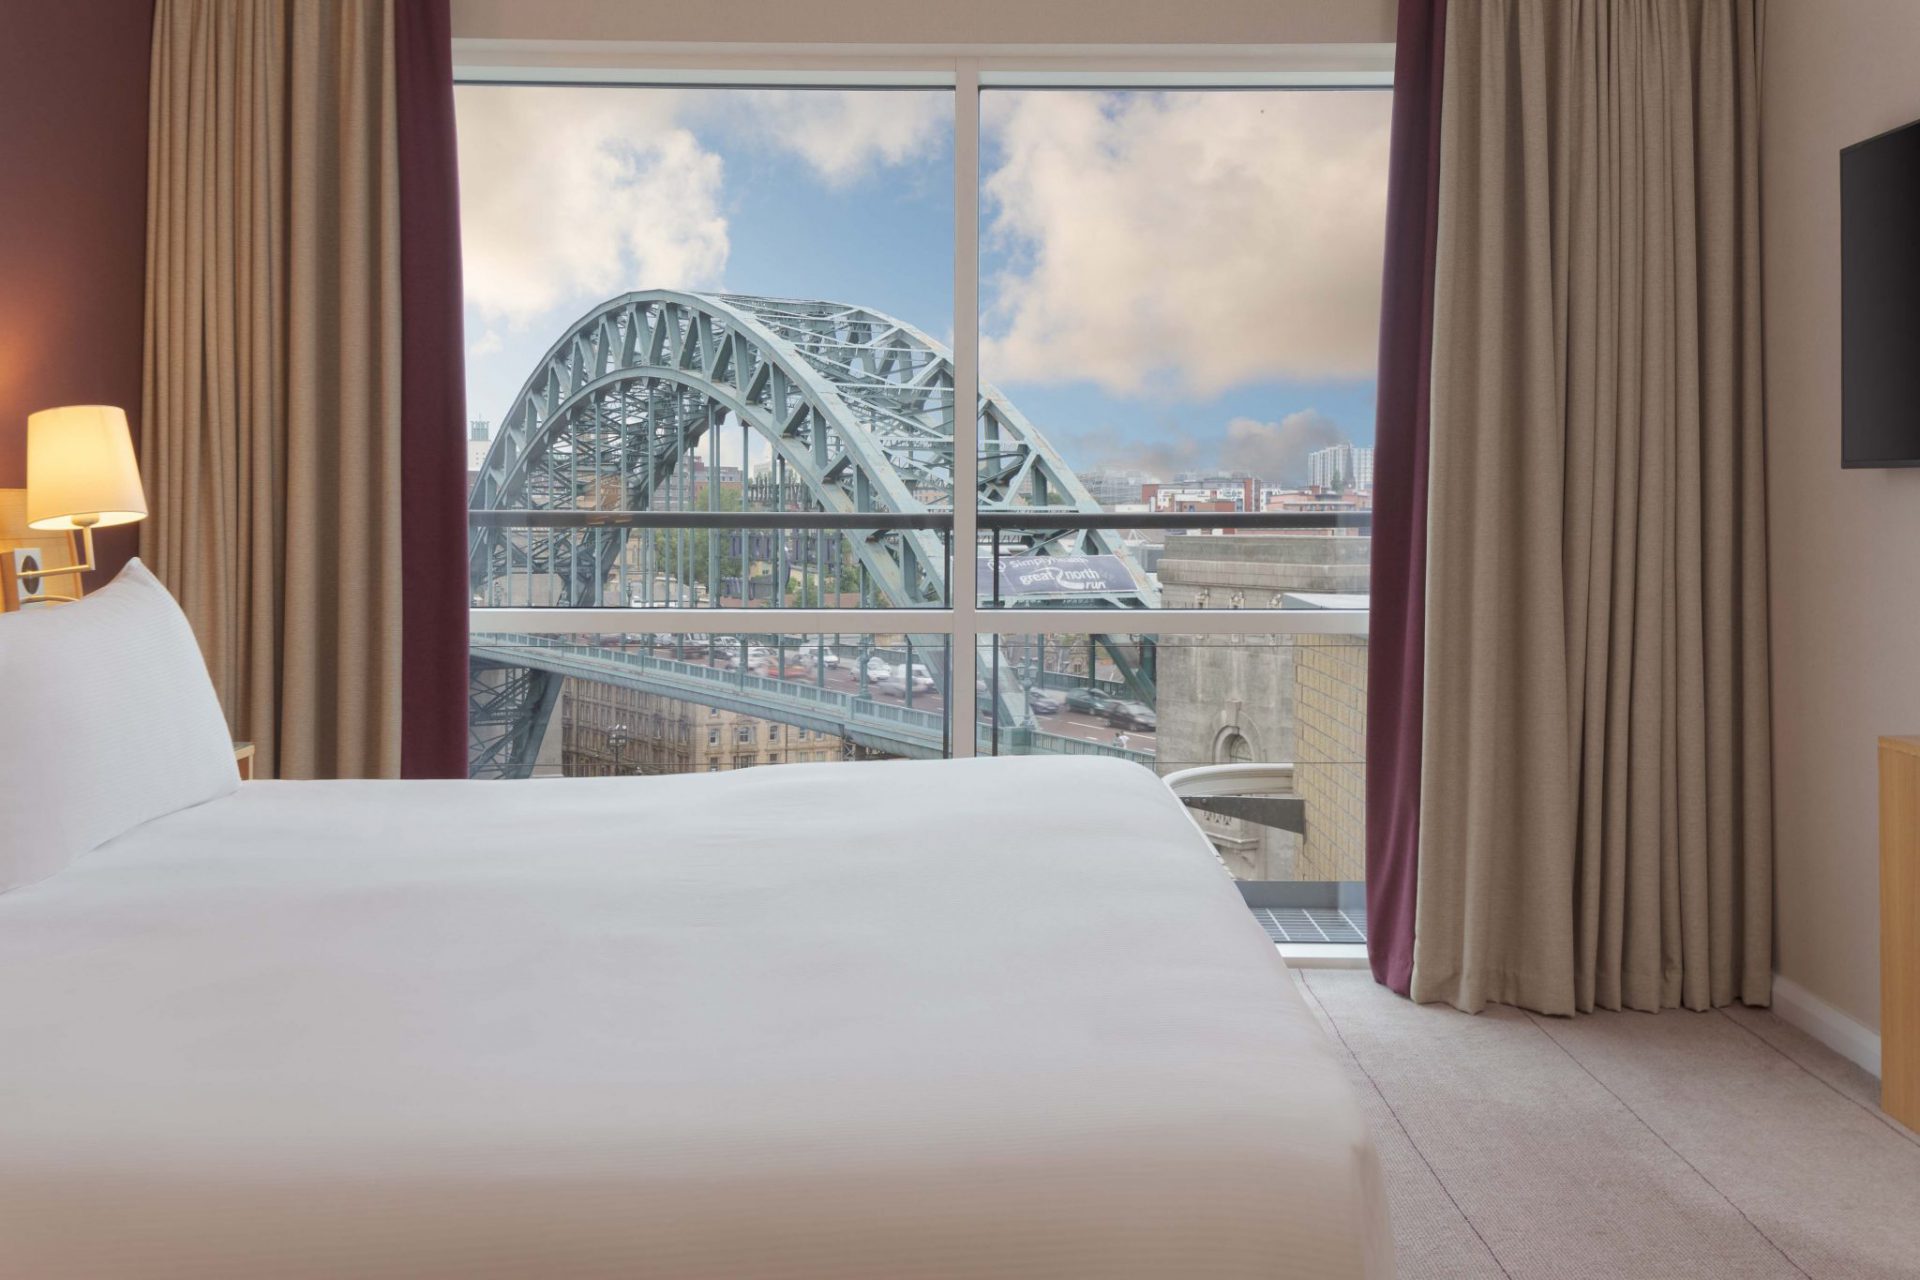 Hilton Newcastle Gateshead - YoNinja - Restaurants, Hotels, and Reviews